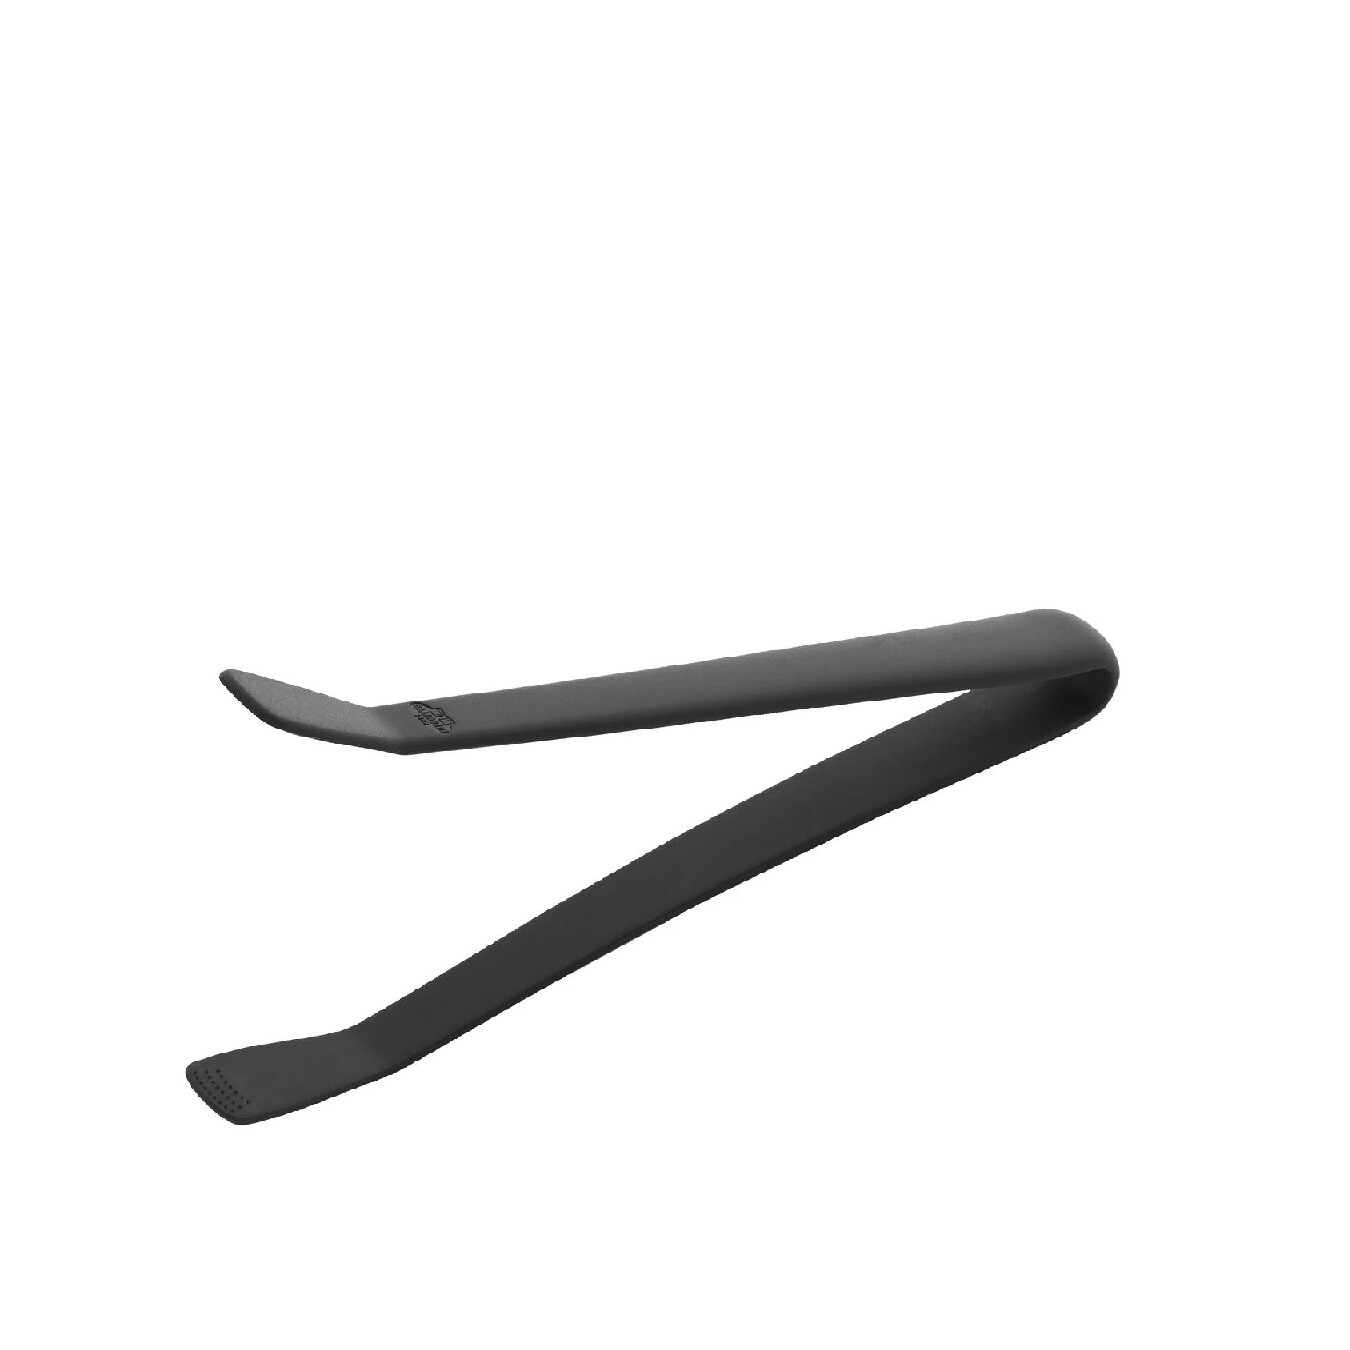 BALLARINI 'nero' serveertang 27cm silicone zwart  PROMO 12,95 -3,00